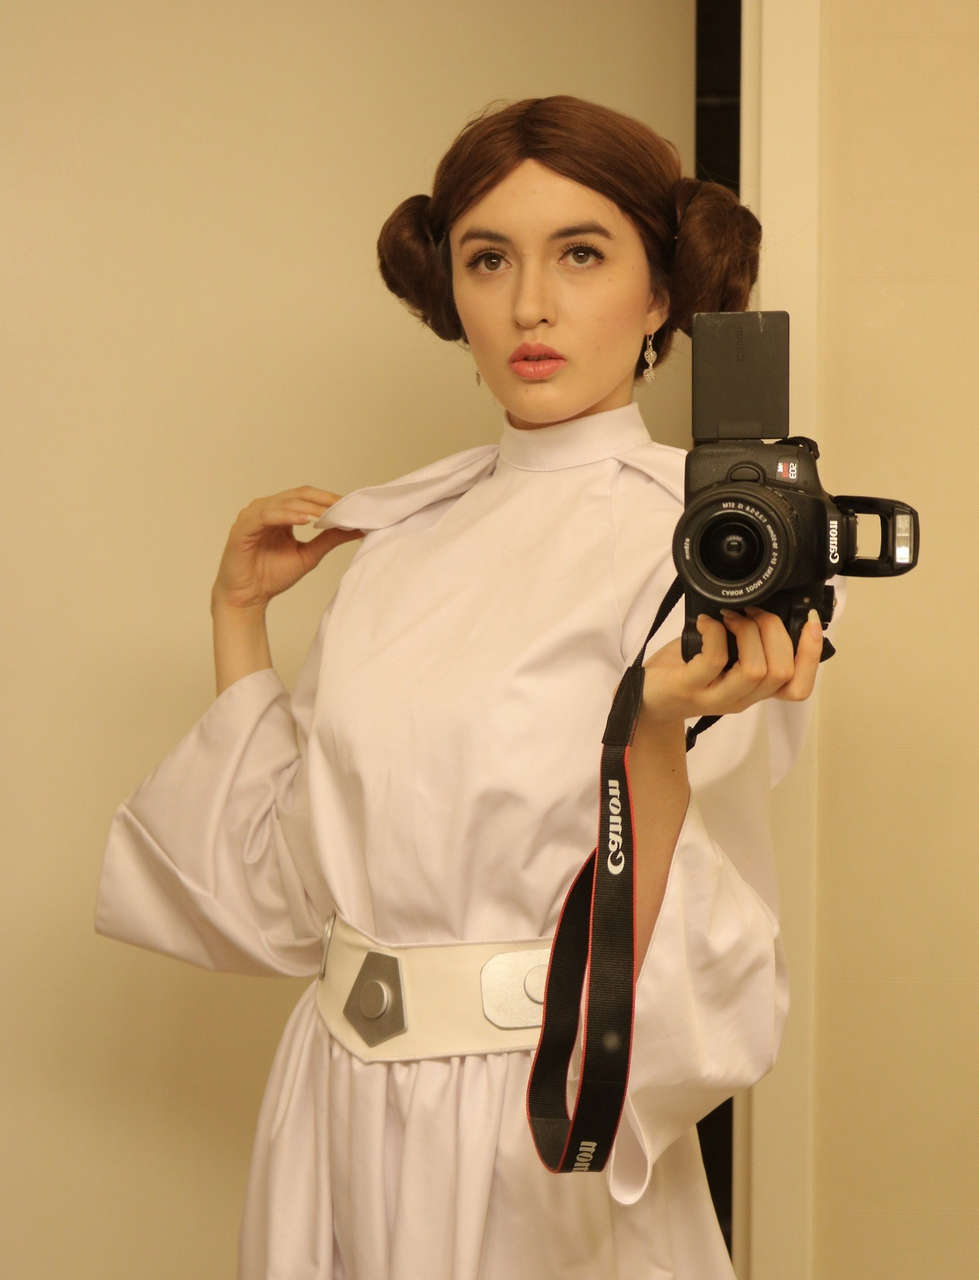 Rebloghogs Take Some Princess Leia Selfies From